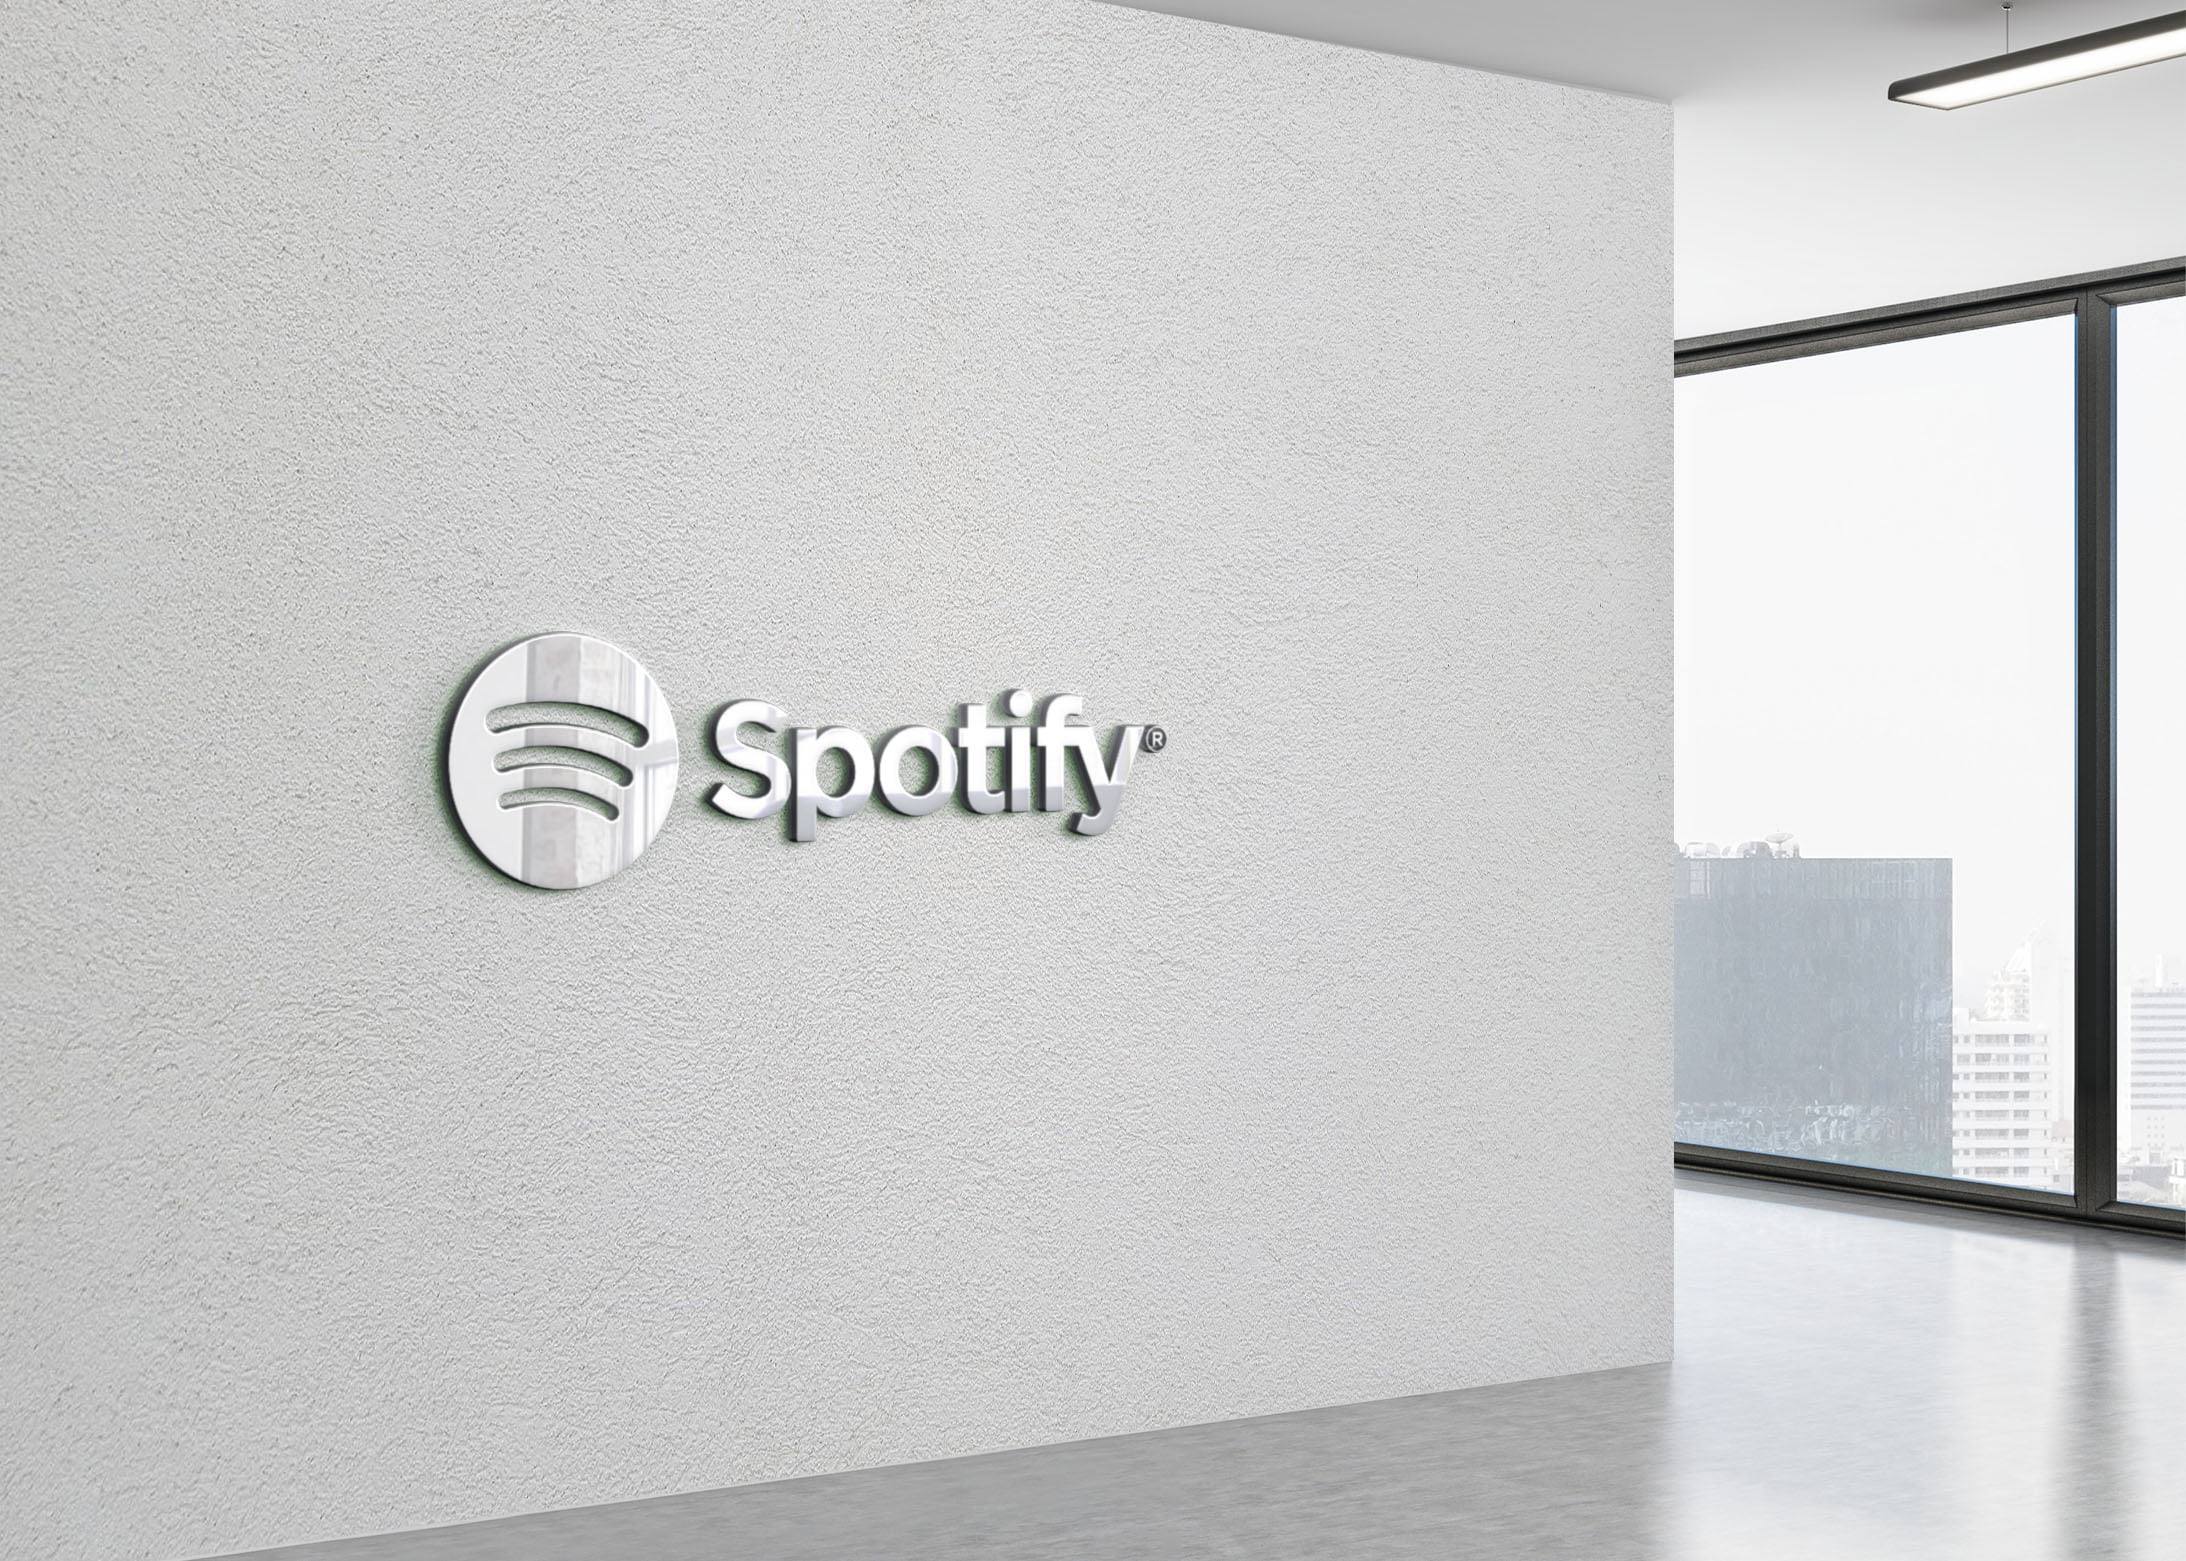 Spotify logo on 3d office wall